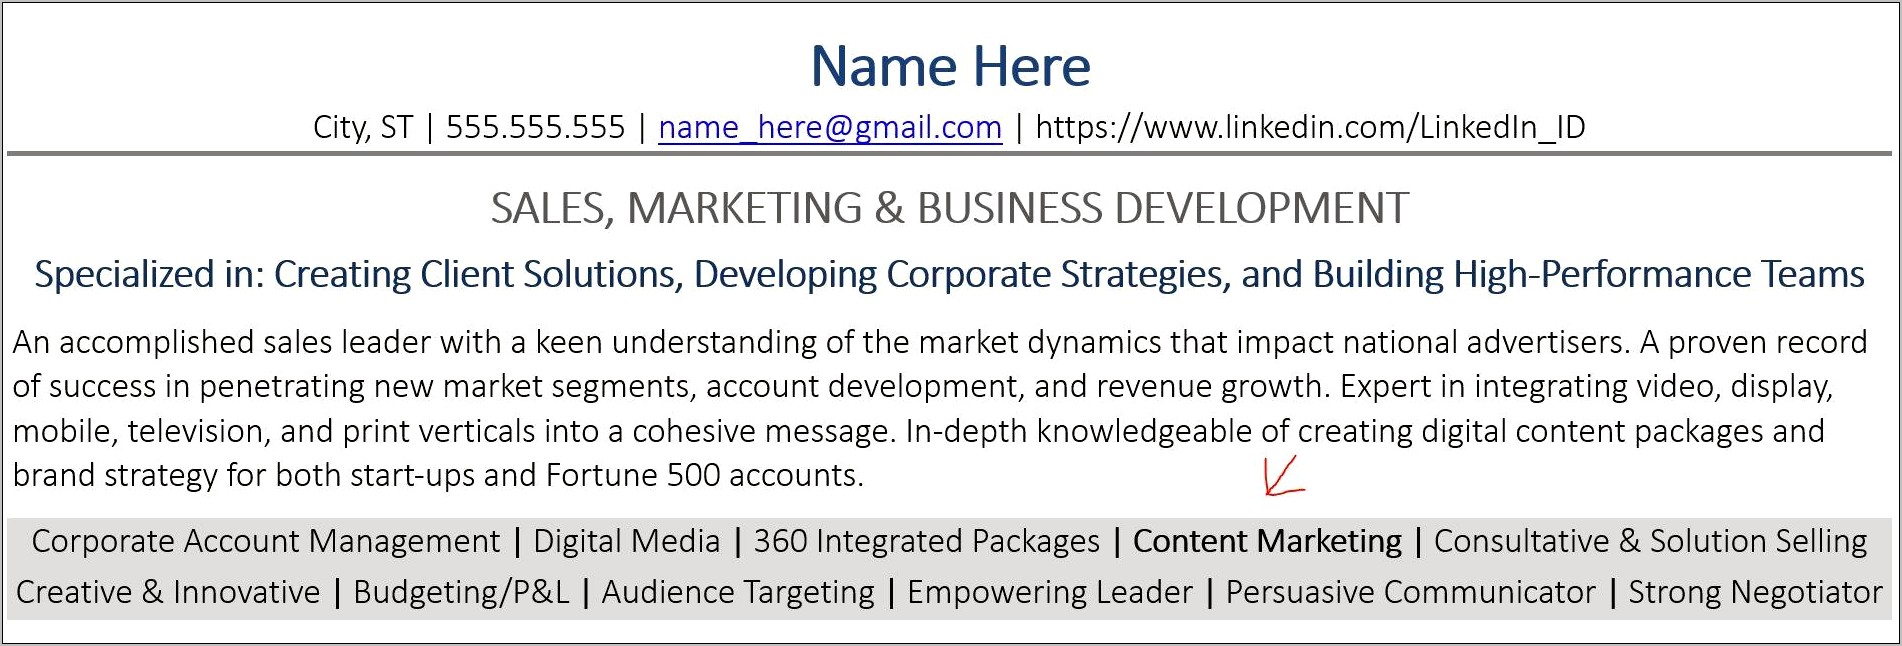 Marketing Resume Skills And Abilities